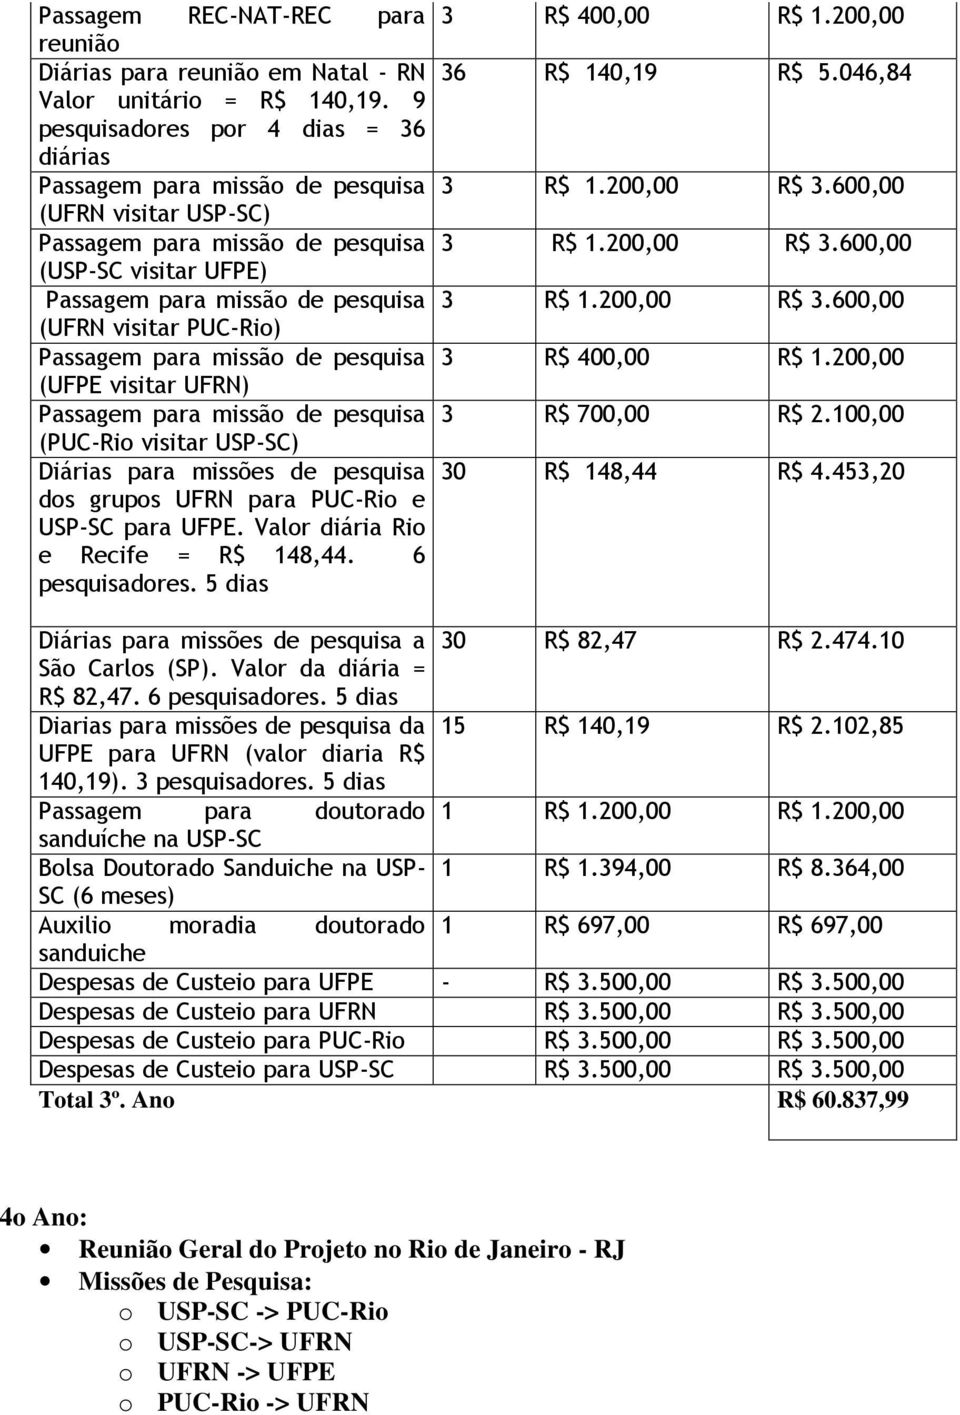 PUC-Rio e USP-SC para UFPE. Valor diária Rio e Recife = R$ 148,44. 6 3 R$ 400,00 R$ 1.200,00 36 R$ 140,19 R$ 5.046,84 3 R$ 400,00 R$ 1.200,00 3 R$ 700,00 R$ 2.100,00 30 R$ 148,44 R$ 4.